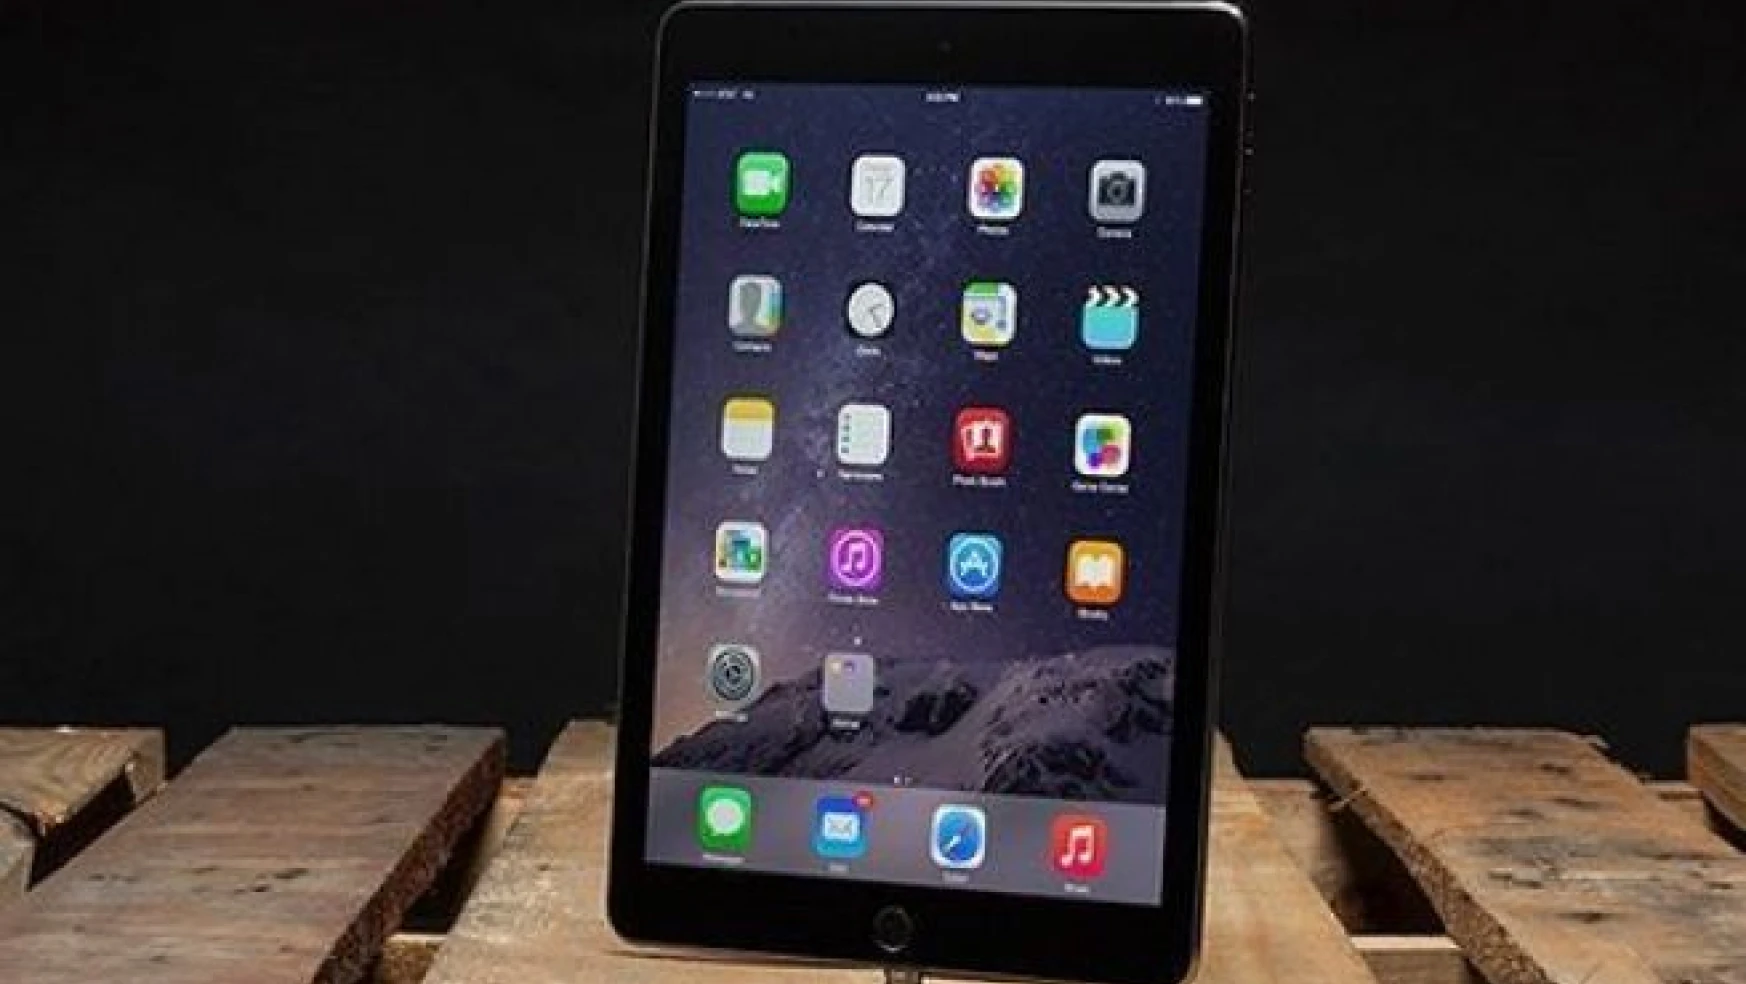 iPad Air 3 iddiaları tekrar alevlendi: 4 adet hoparlör, LED flaşlı kamera